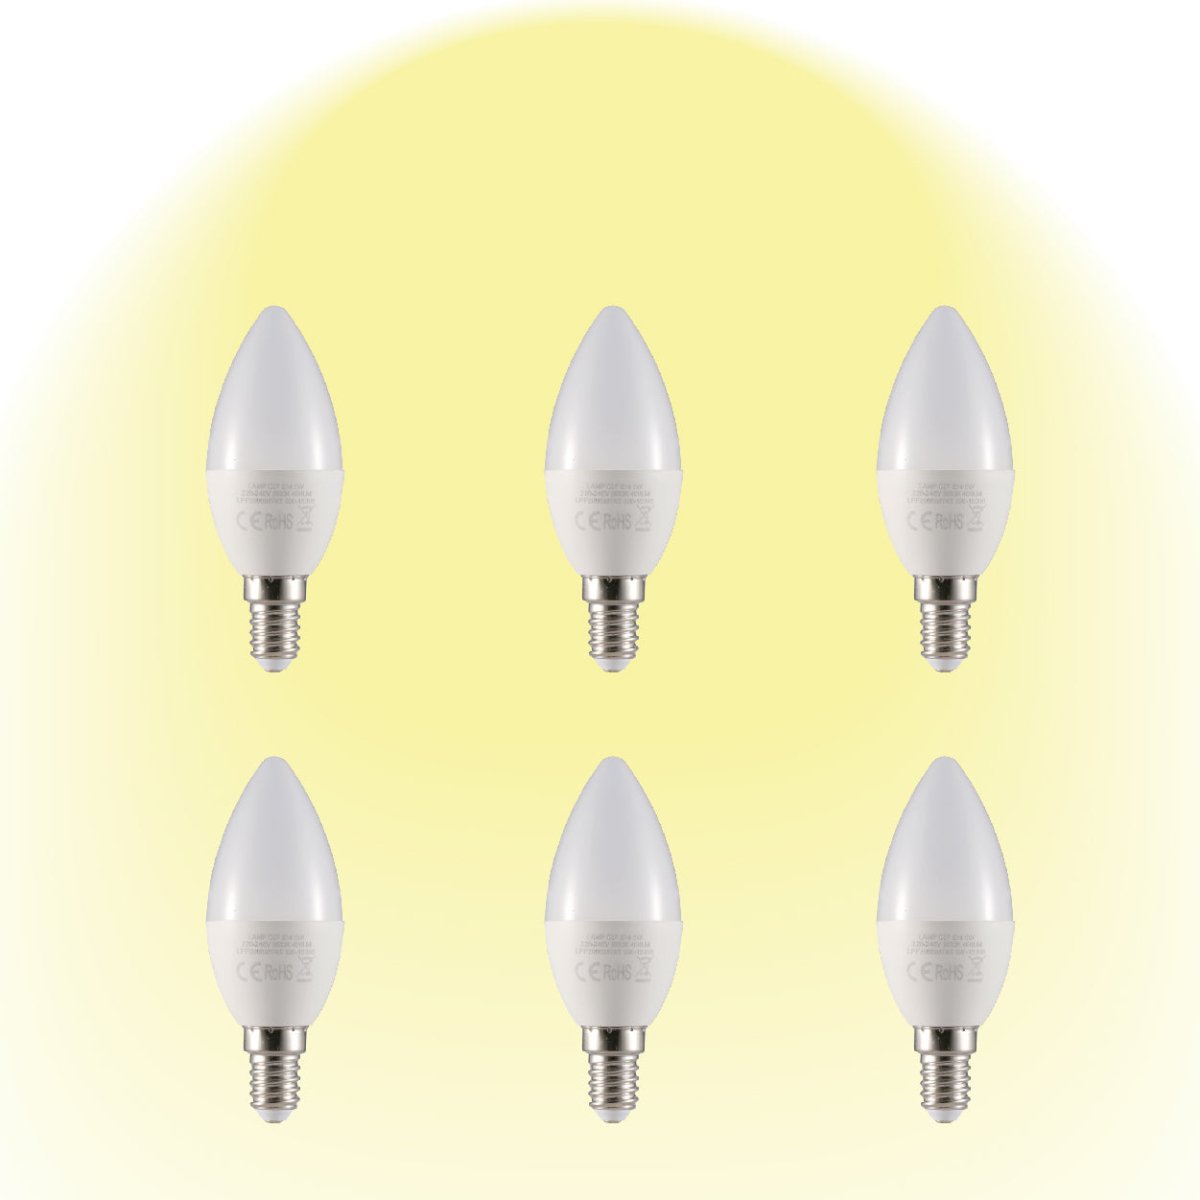 Vela LED Candle Bulb C37 E14 Small Edison Screw 5W pack of 6 warm white